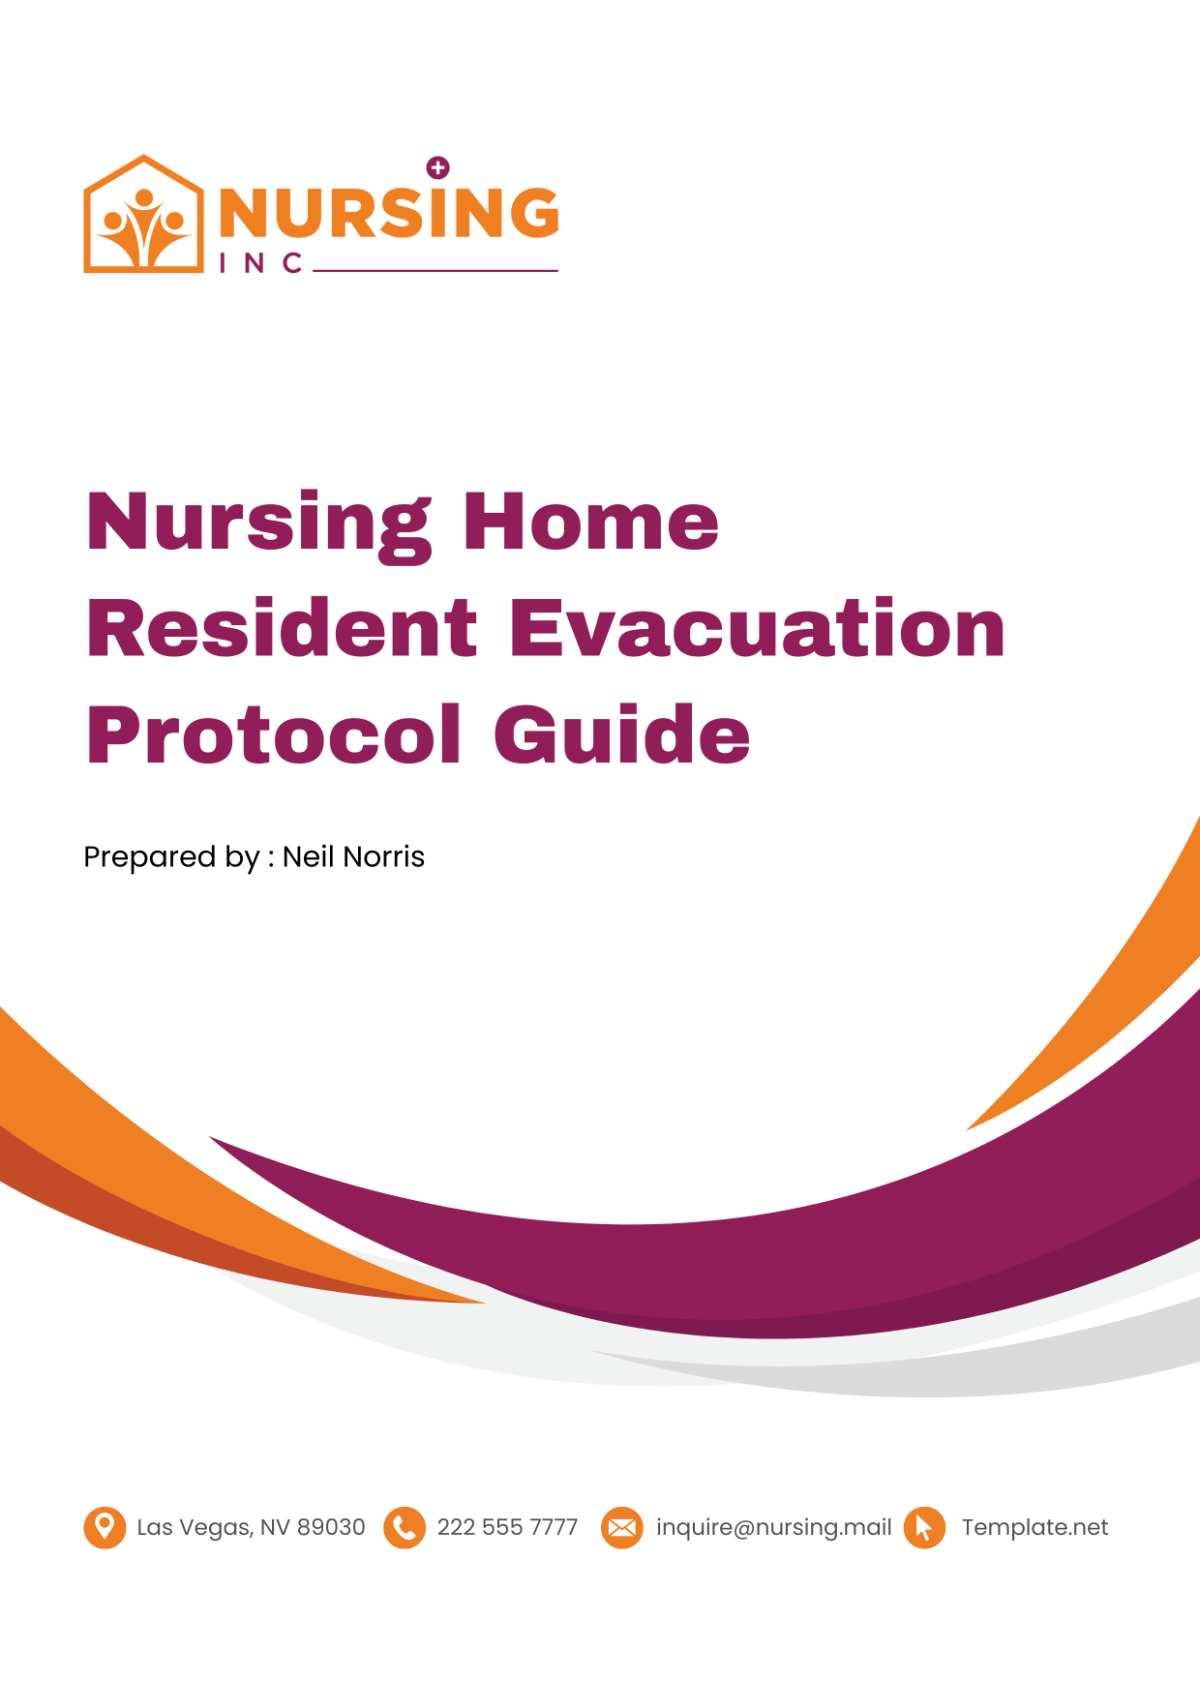 Nursing Home Resident Evacuation Protocol Guide Template